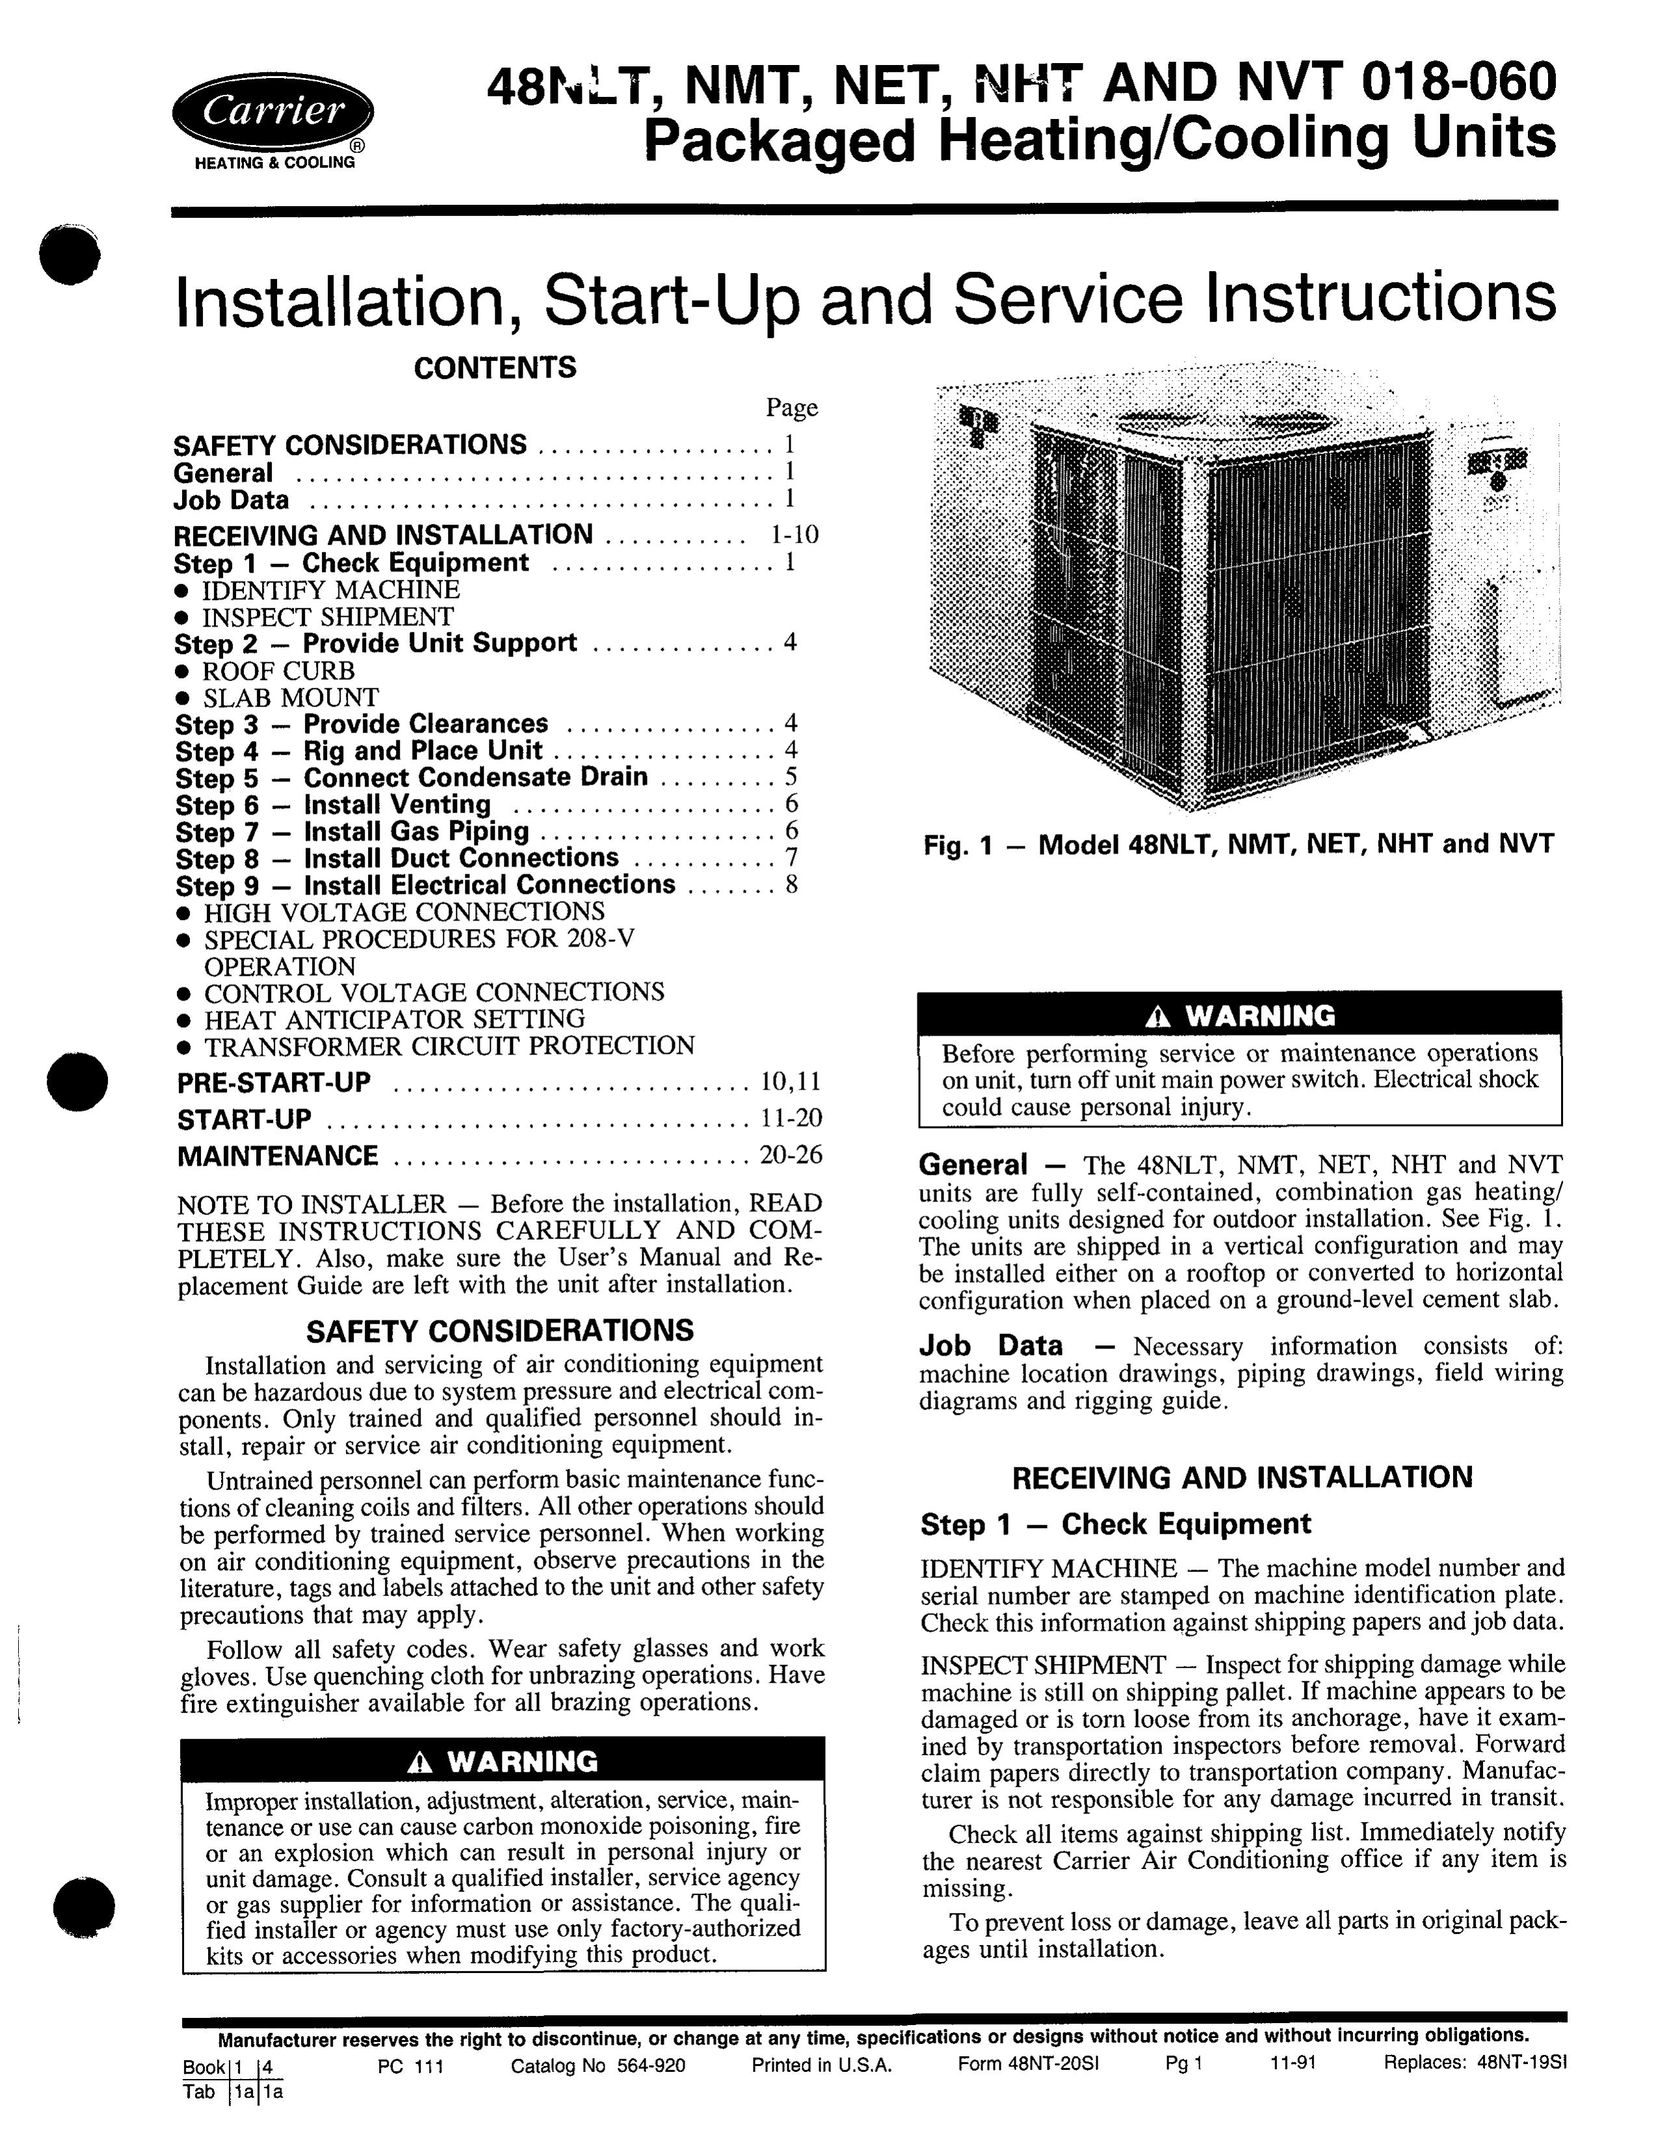 Carrier 48NLT Heating System User Manual